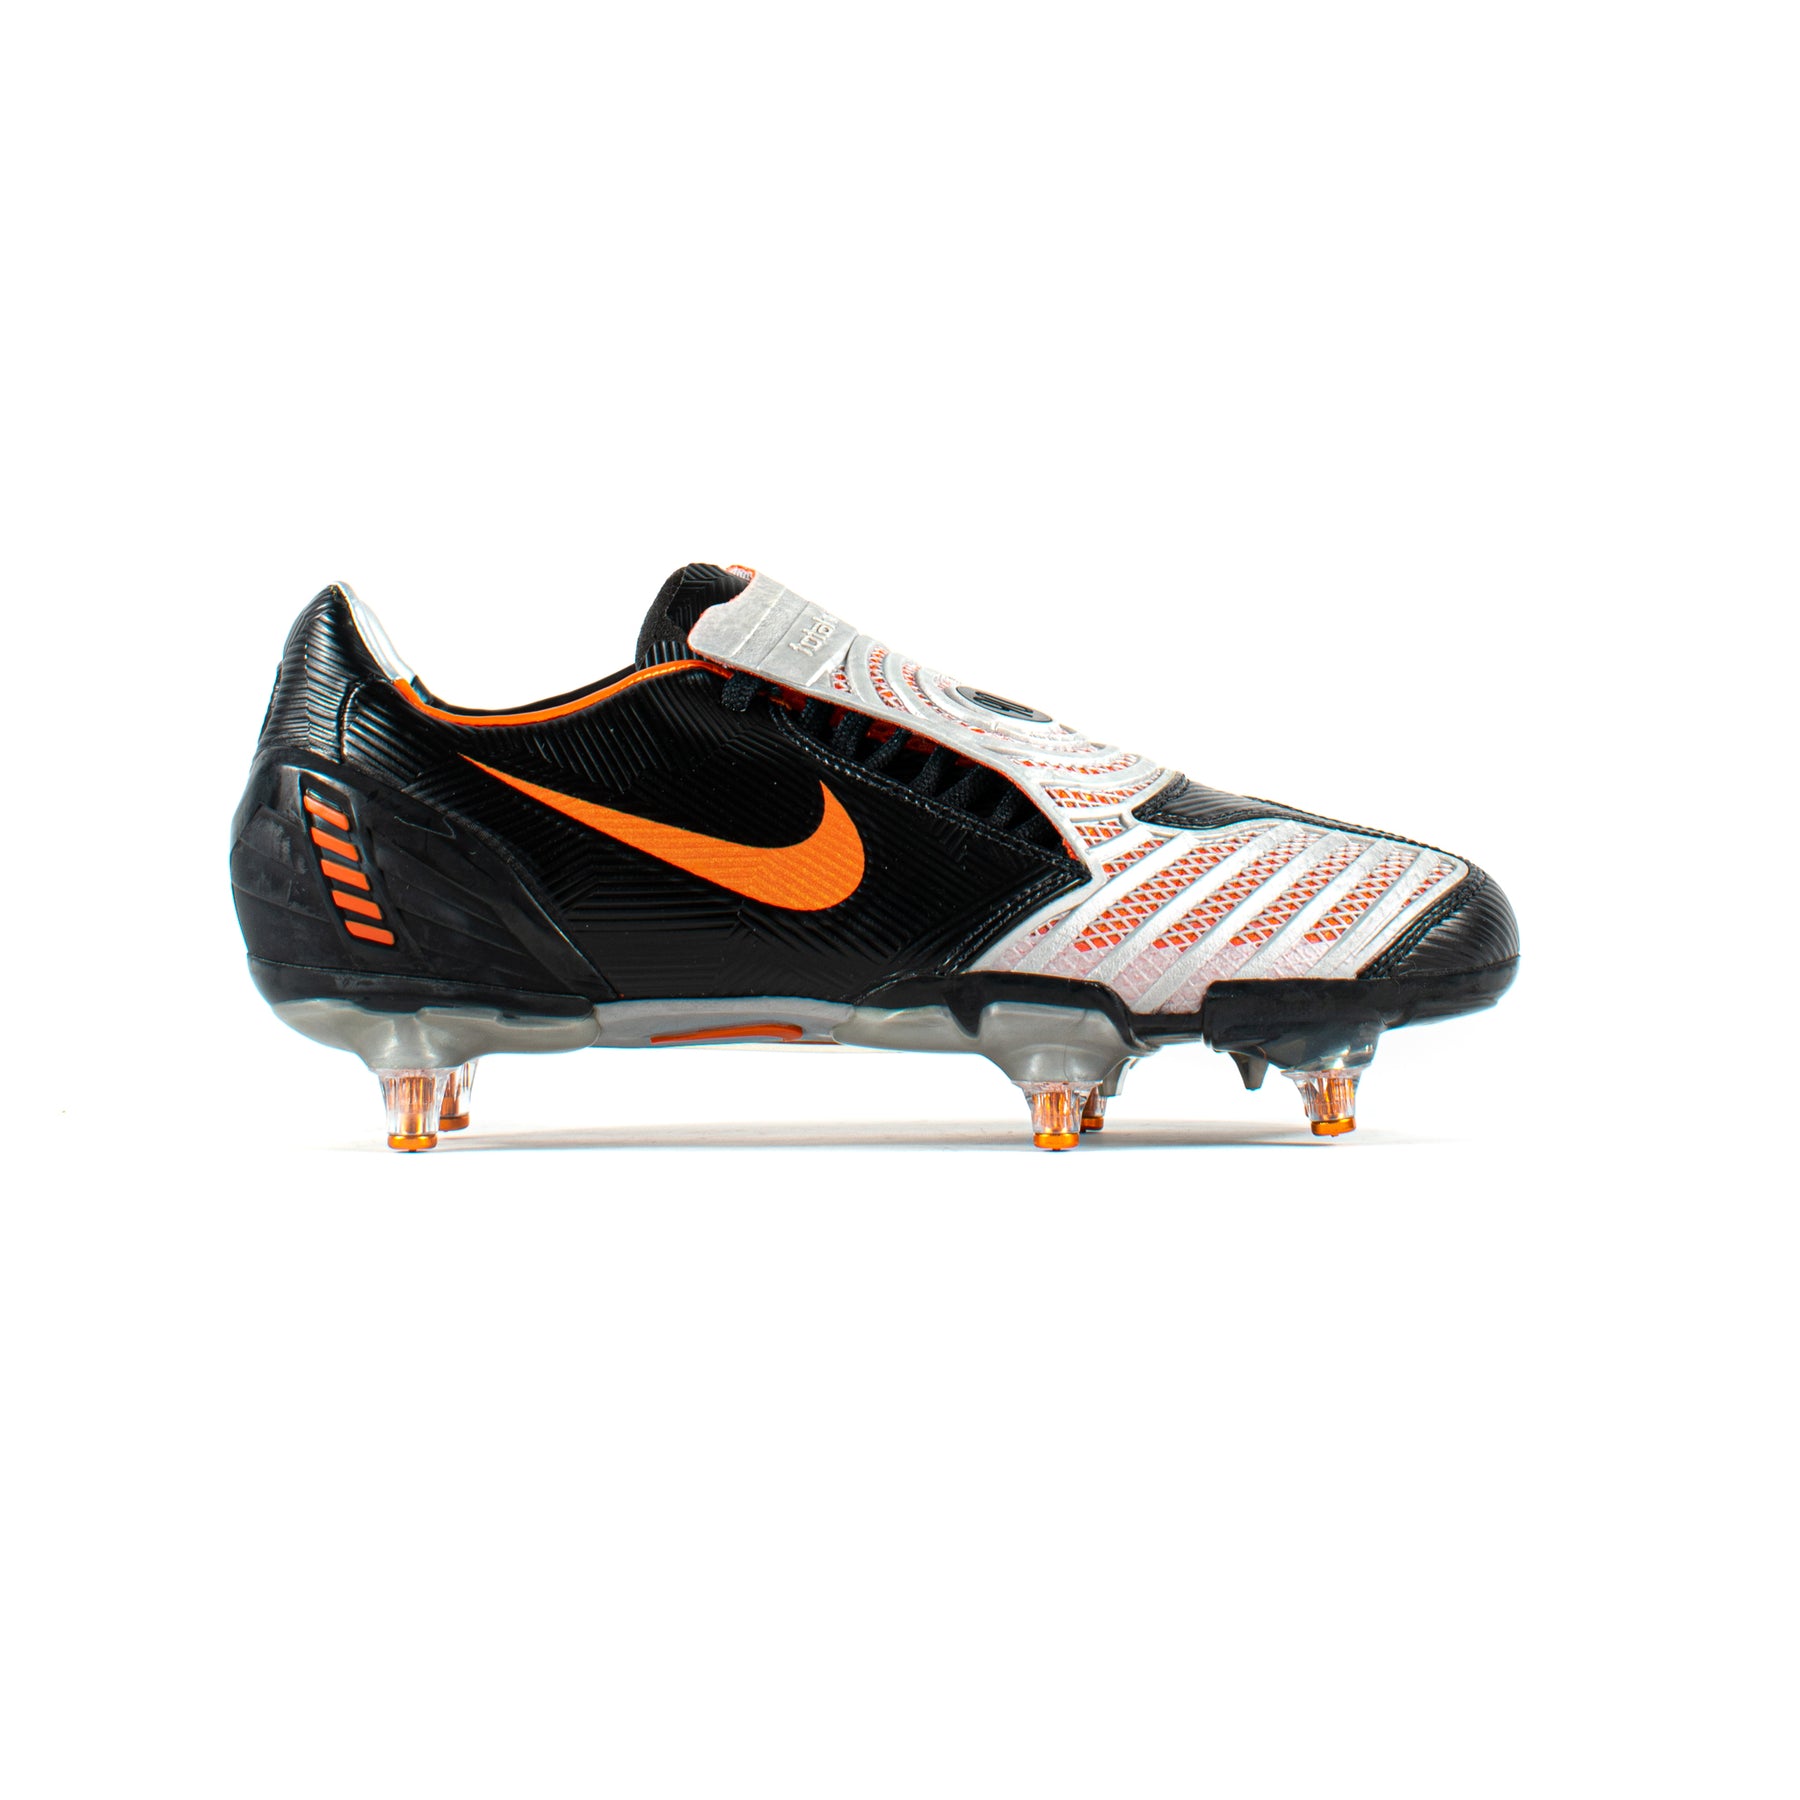 Nike 90 T90 Laser II Black SG – Soccer Cleats